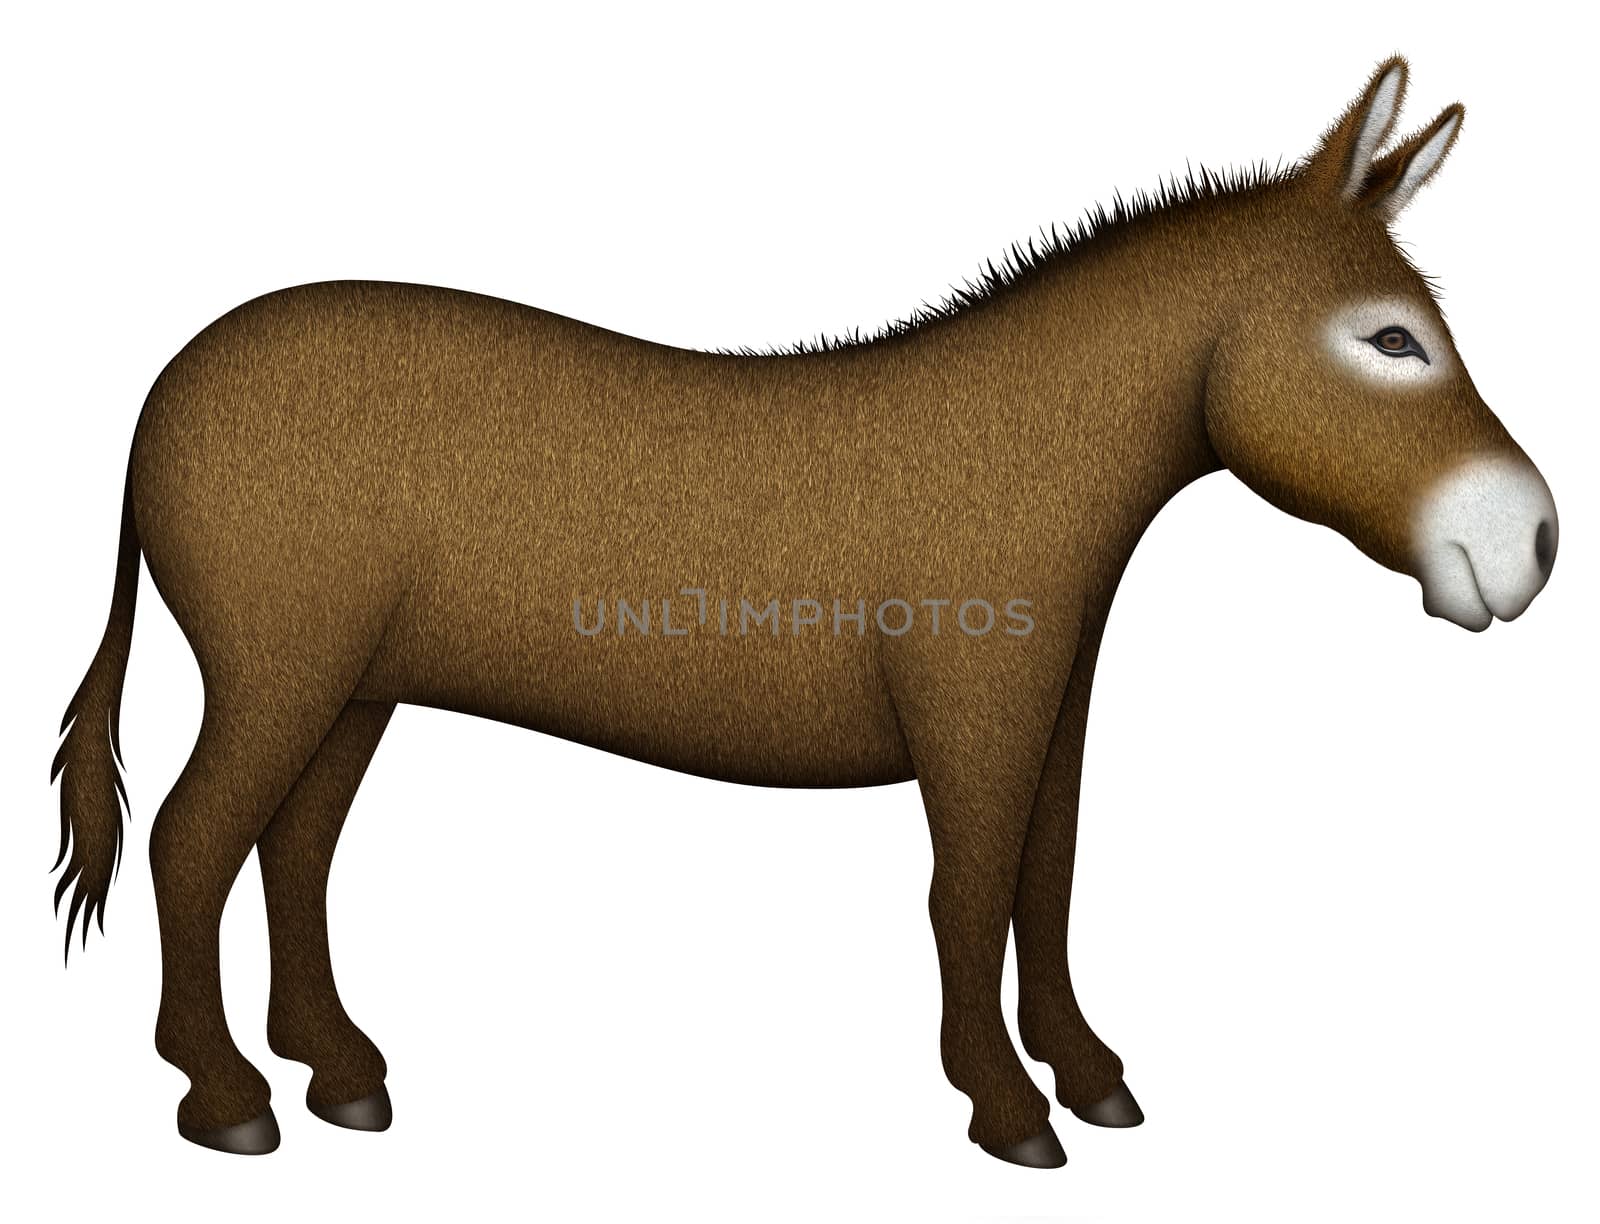 Digital illustration of a donkey — side view.